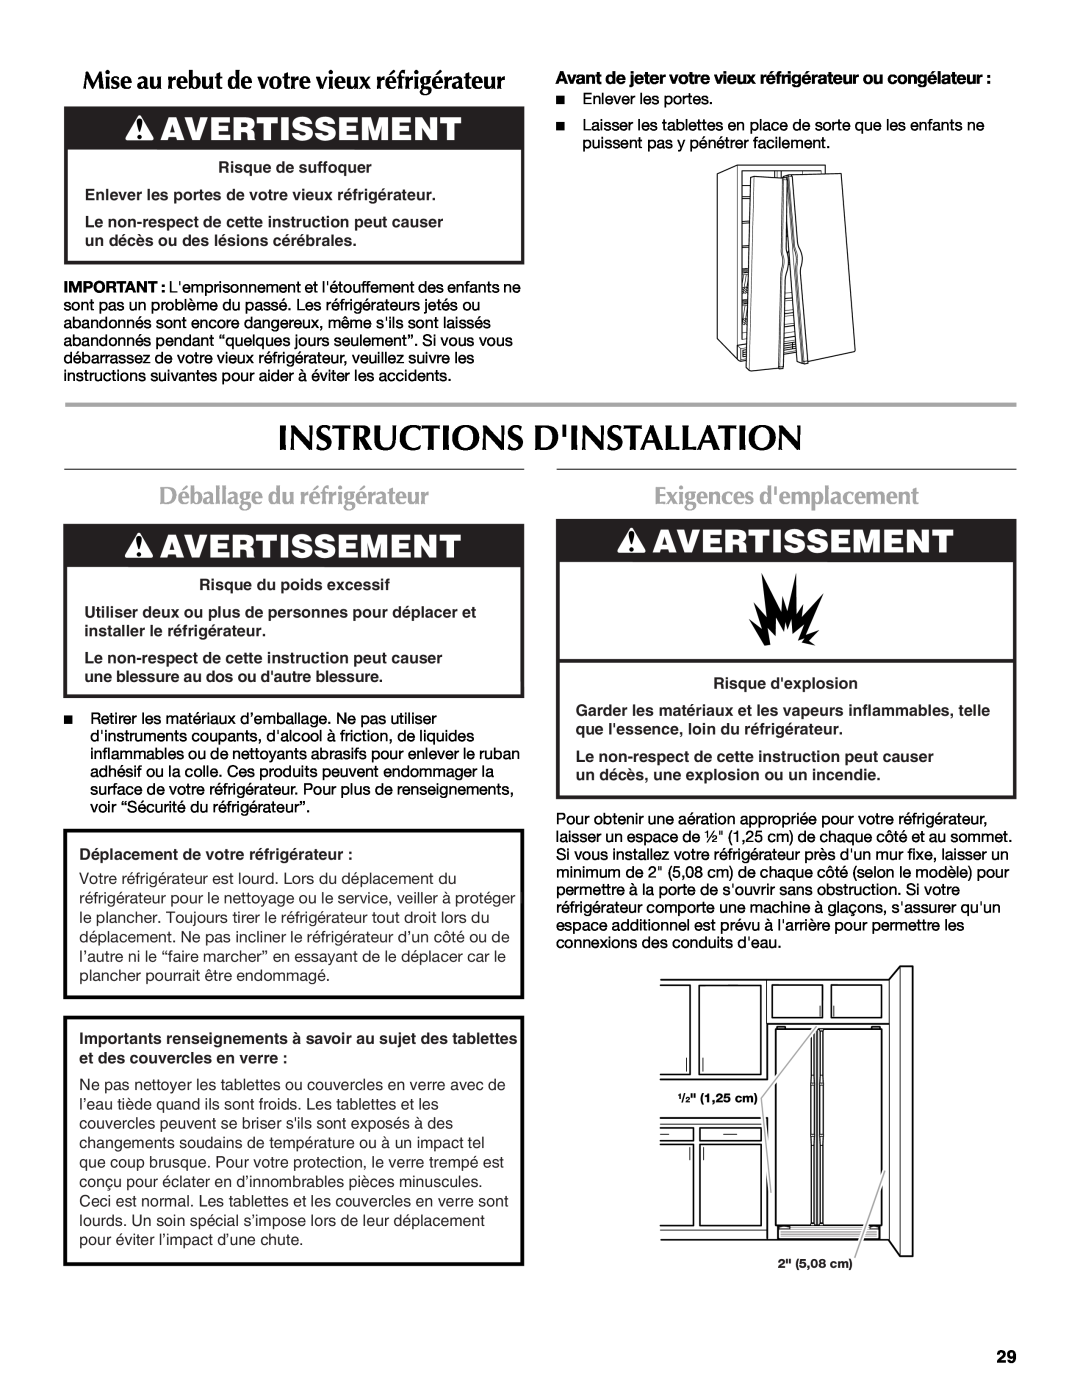 Maytag MSD2254VEW Instructions Dinstallation, Avertissement, Déballage du réfrigérateur, Exigences demplacement 